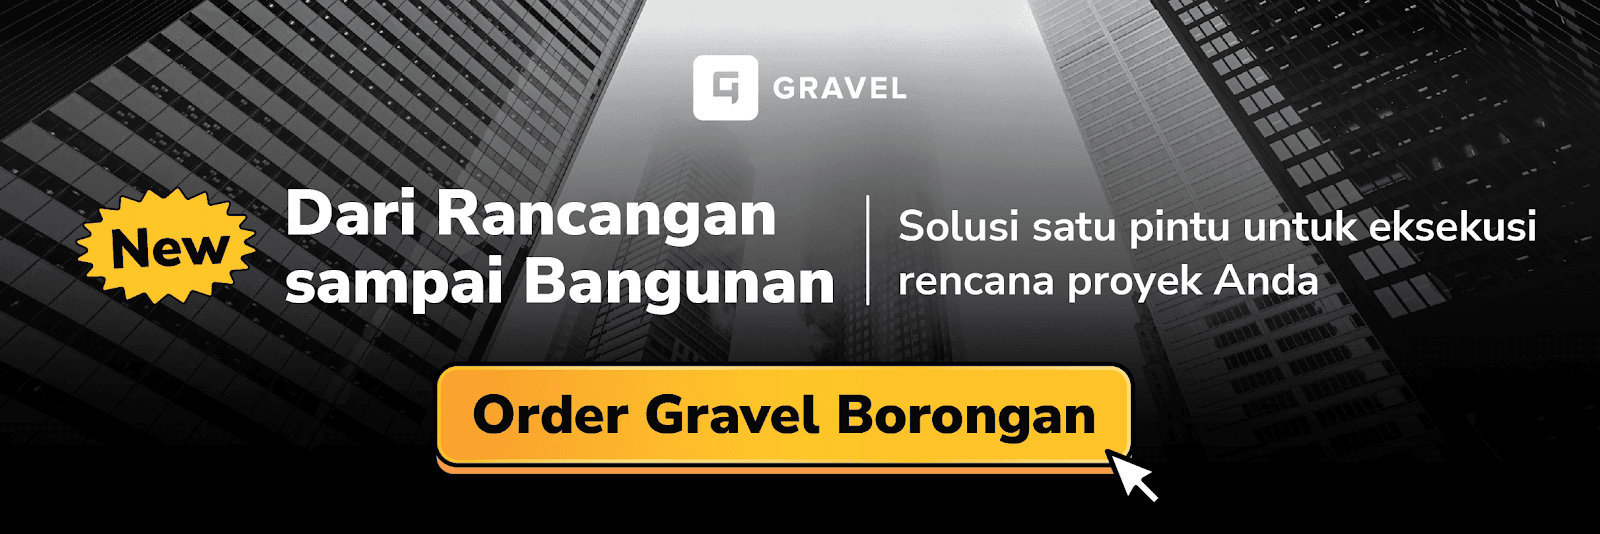 Web Banner_Gravel Borongan.png